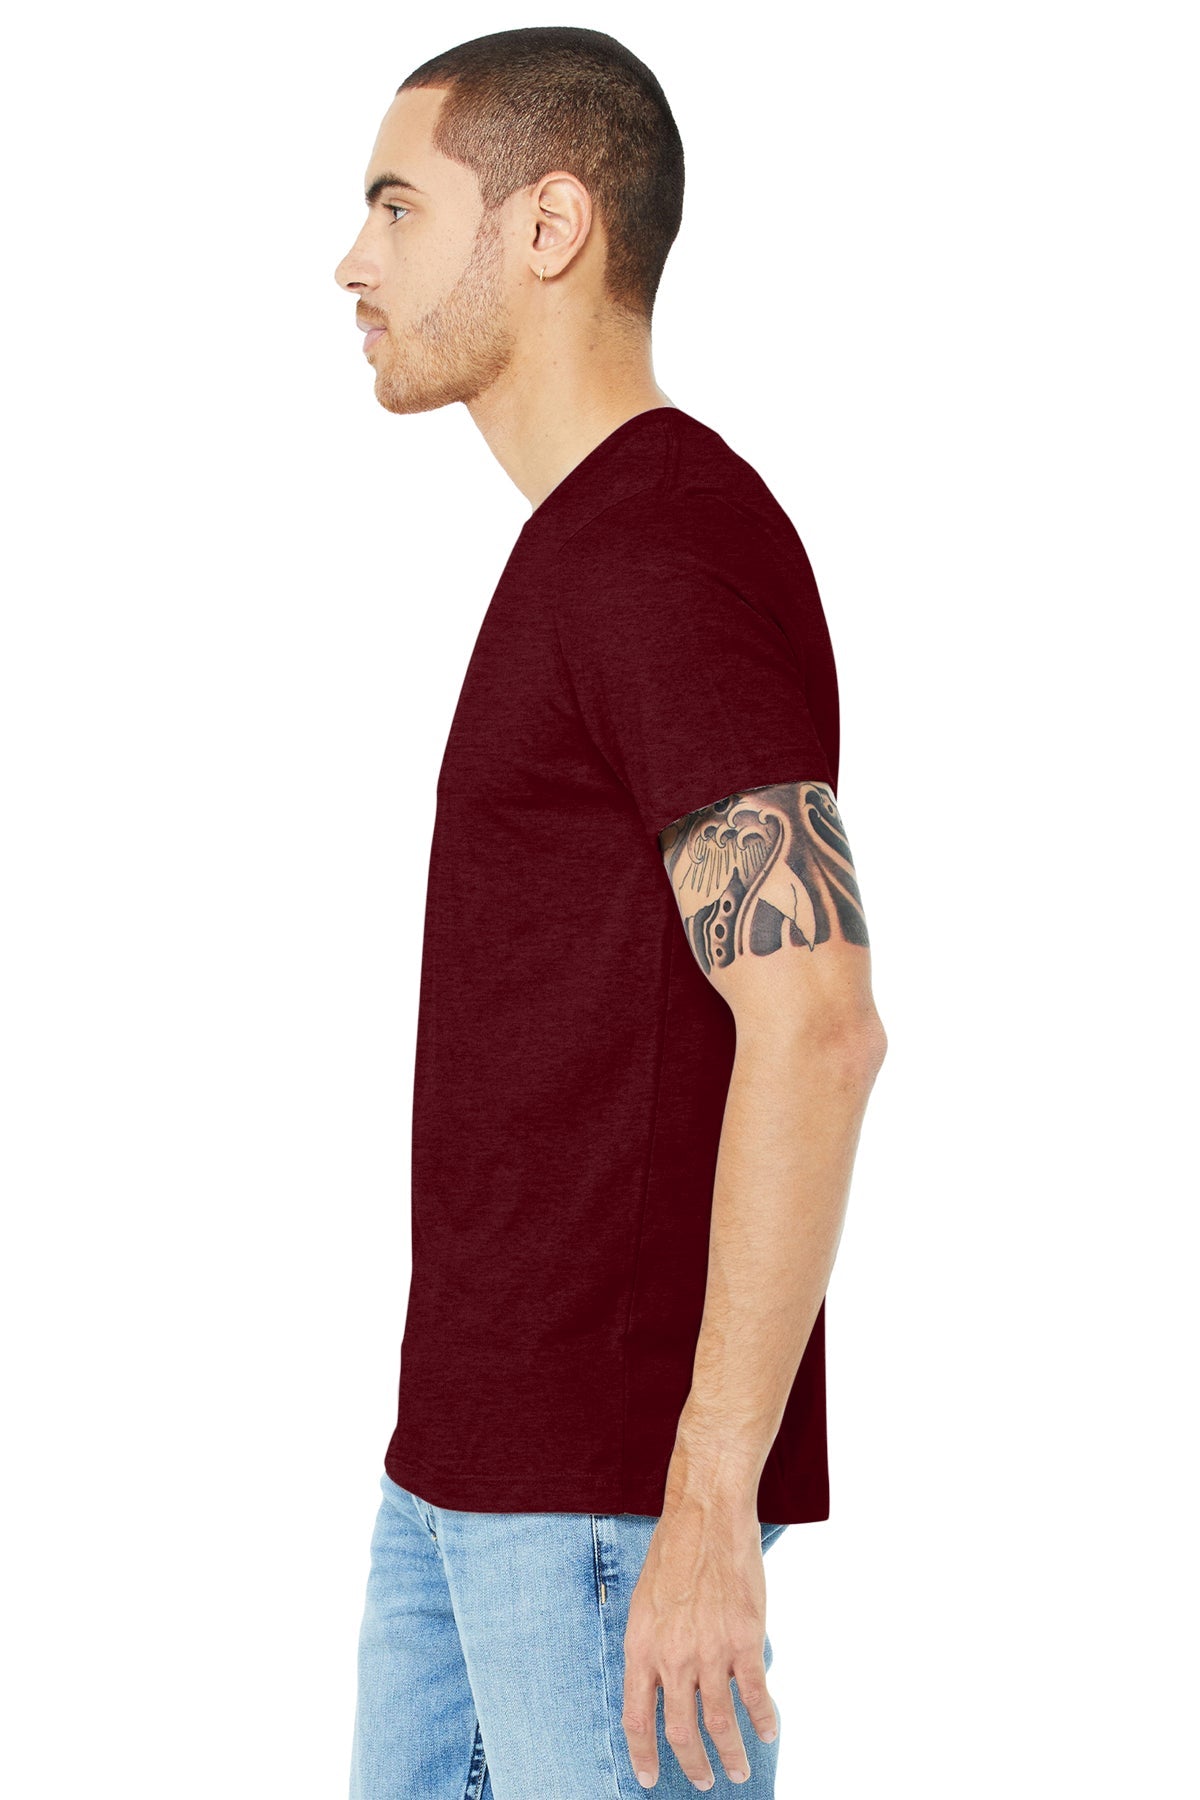 bella + canvas unisex jersey short sleeve t-shirt 3001c heather cardinal